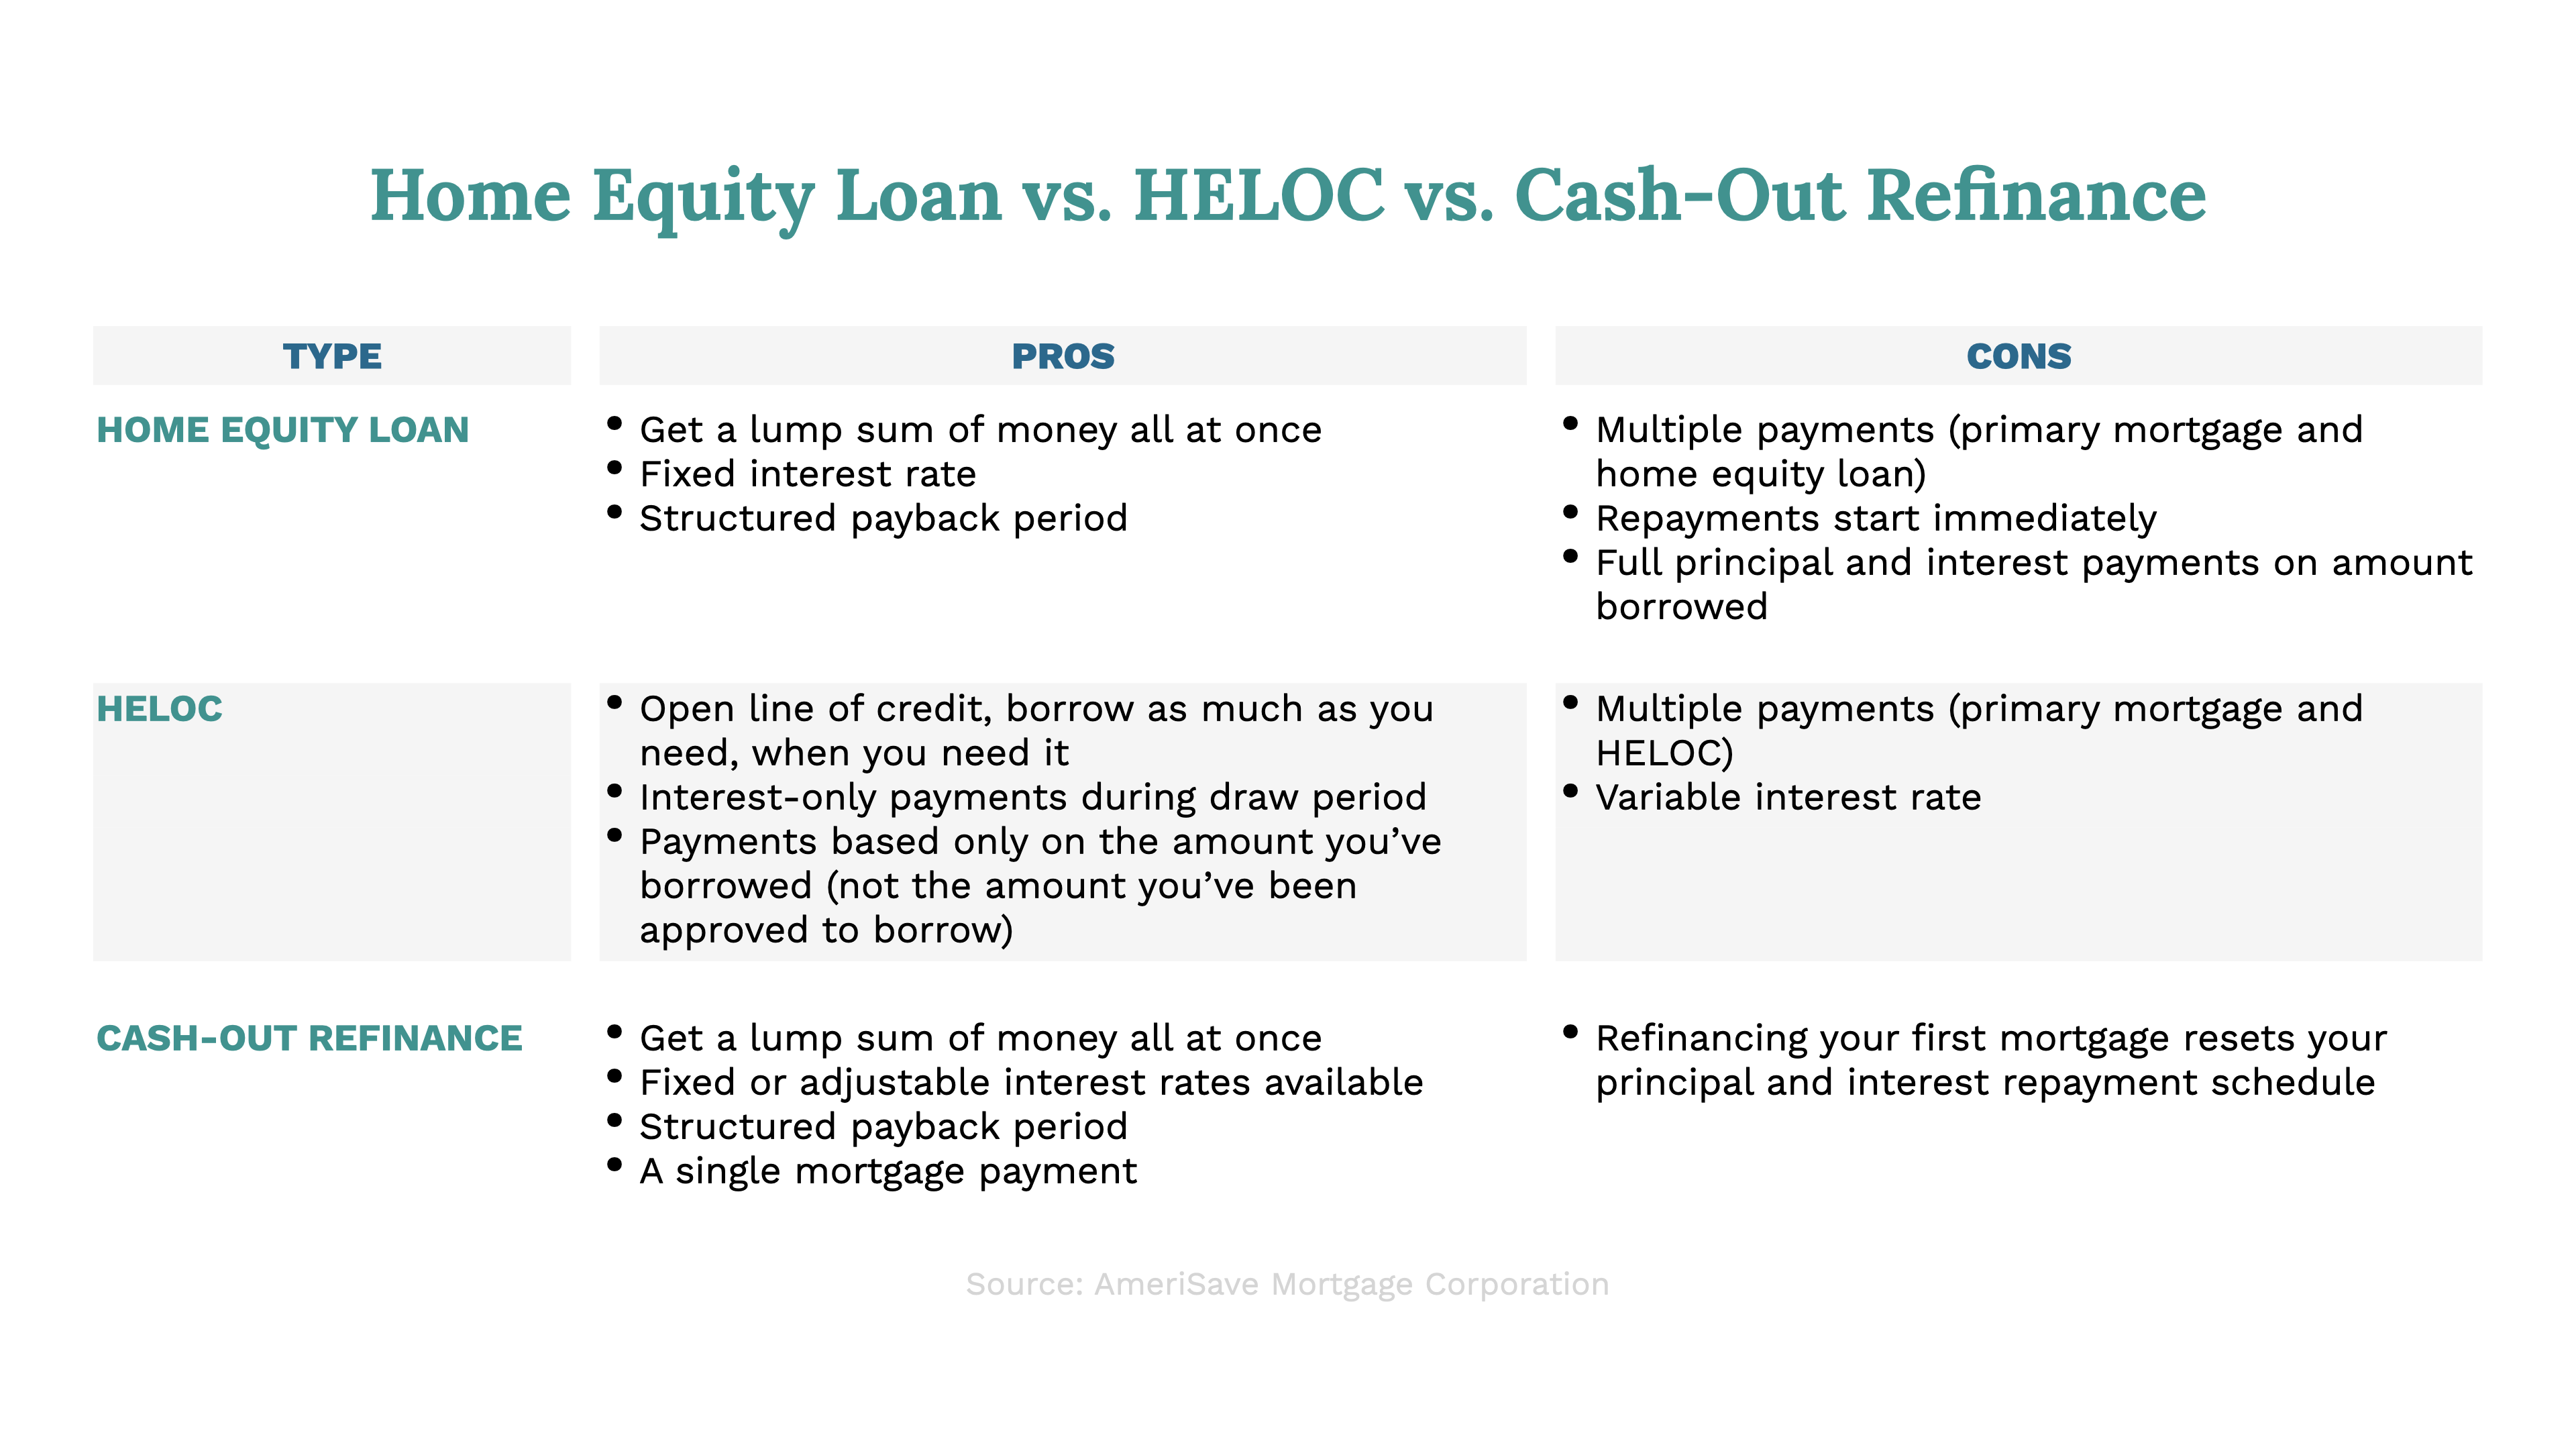 home equity loan vs heloc vs cash-out refi comparison chart